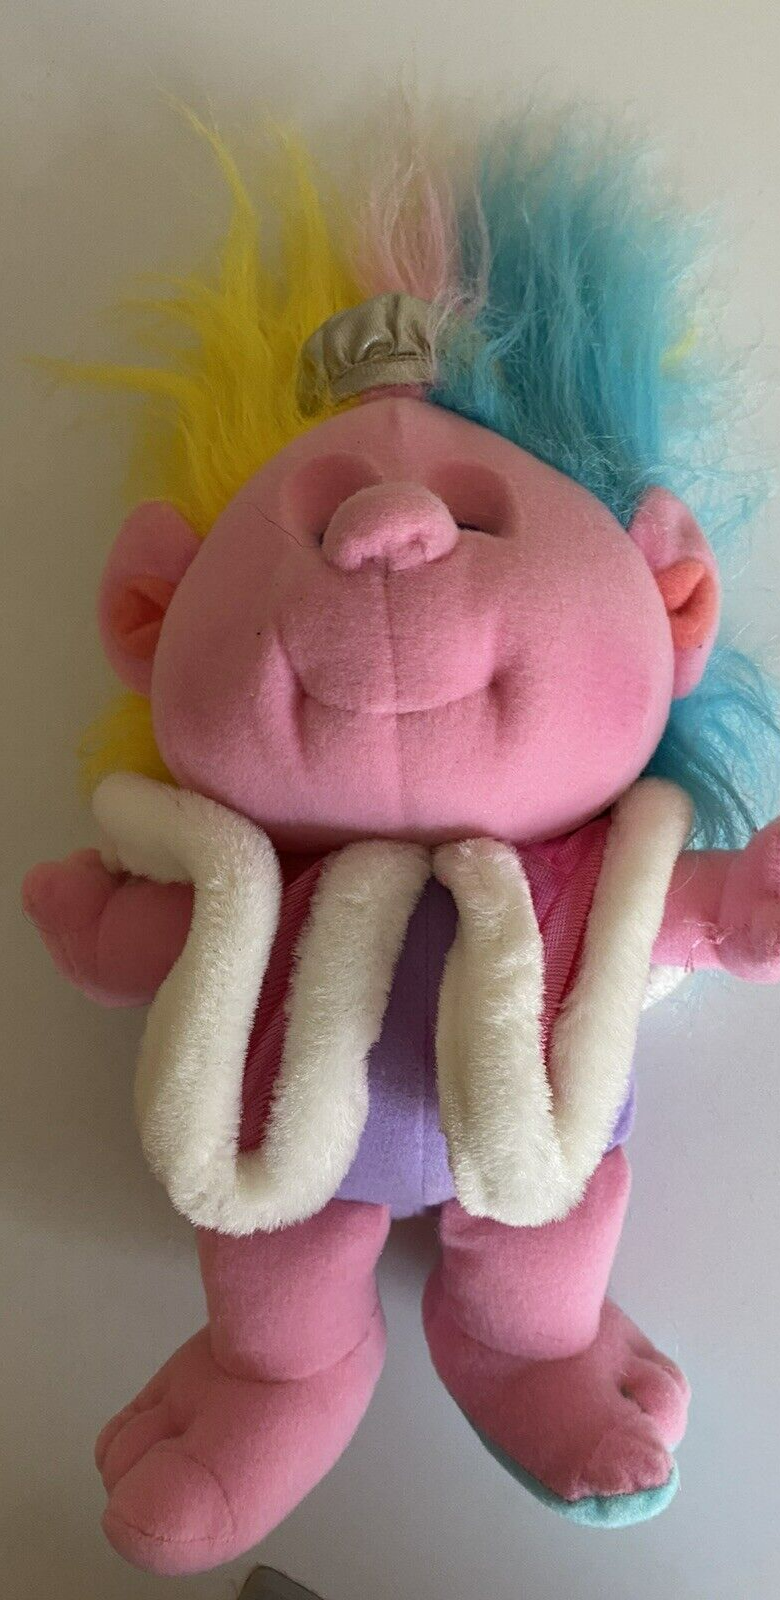 Vintage 1989 Playskool Hobnobbins Cousin princess plush Stuffed Animal VTG Doll - $14.84